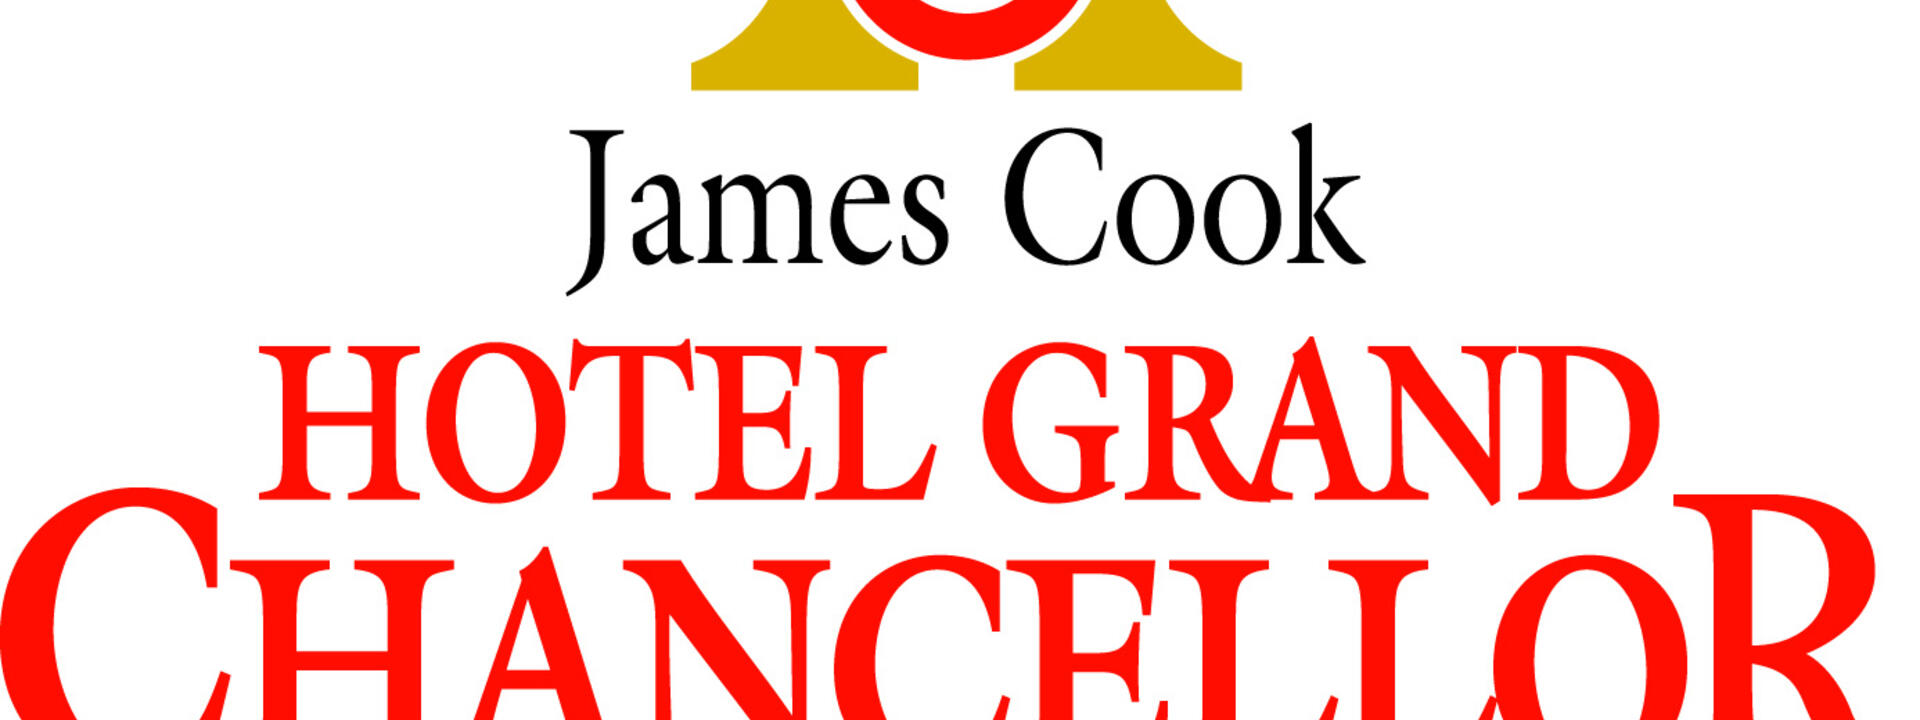 james-cook-logo.jpg